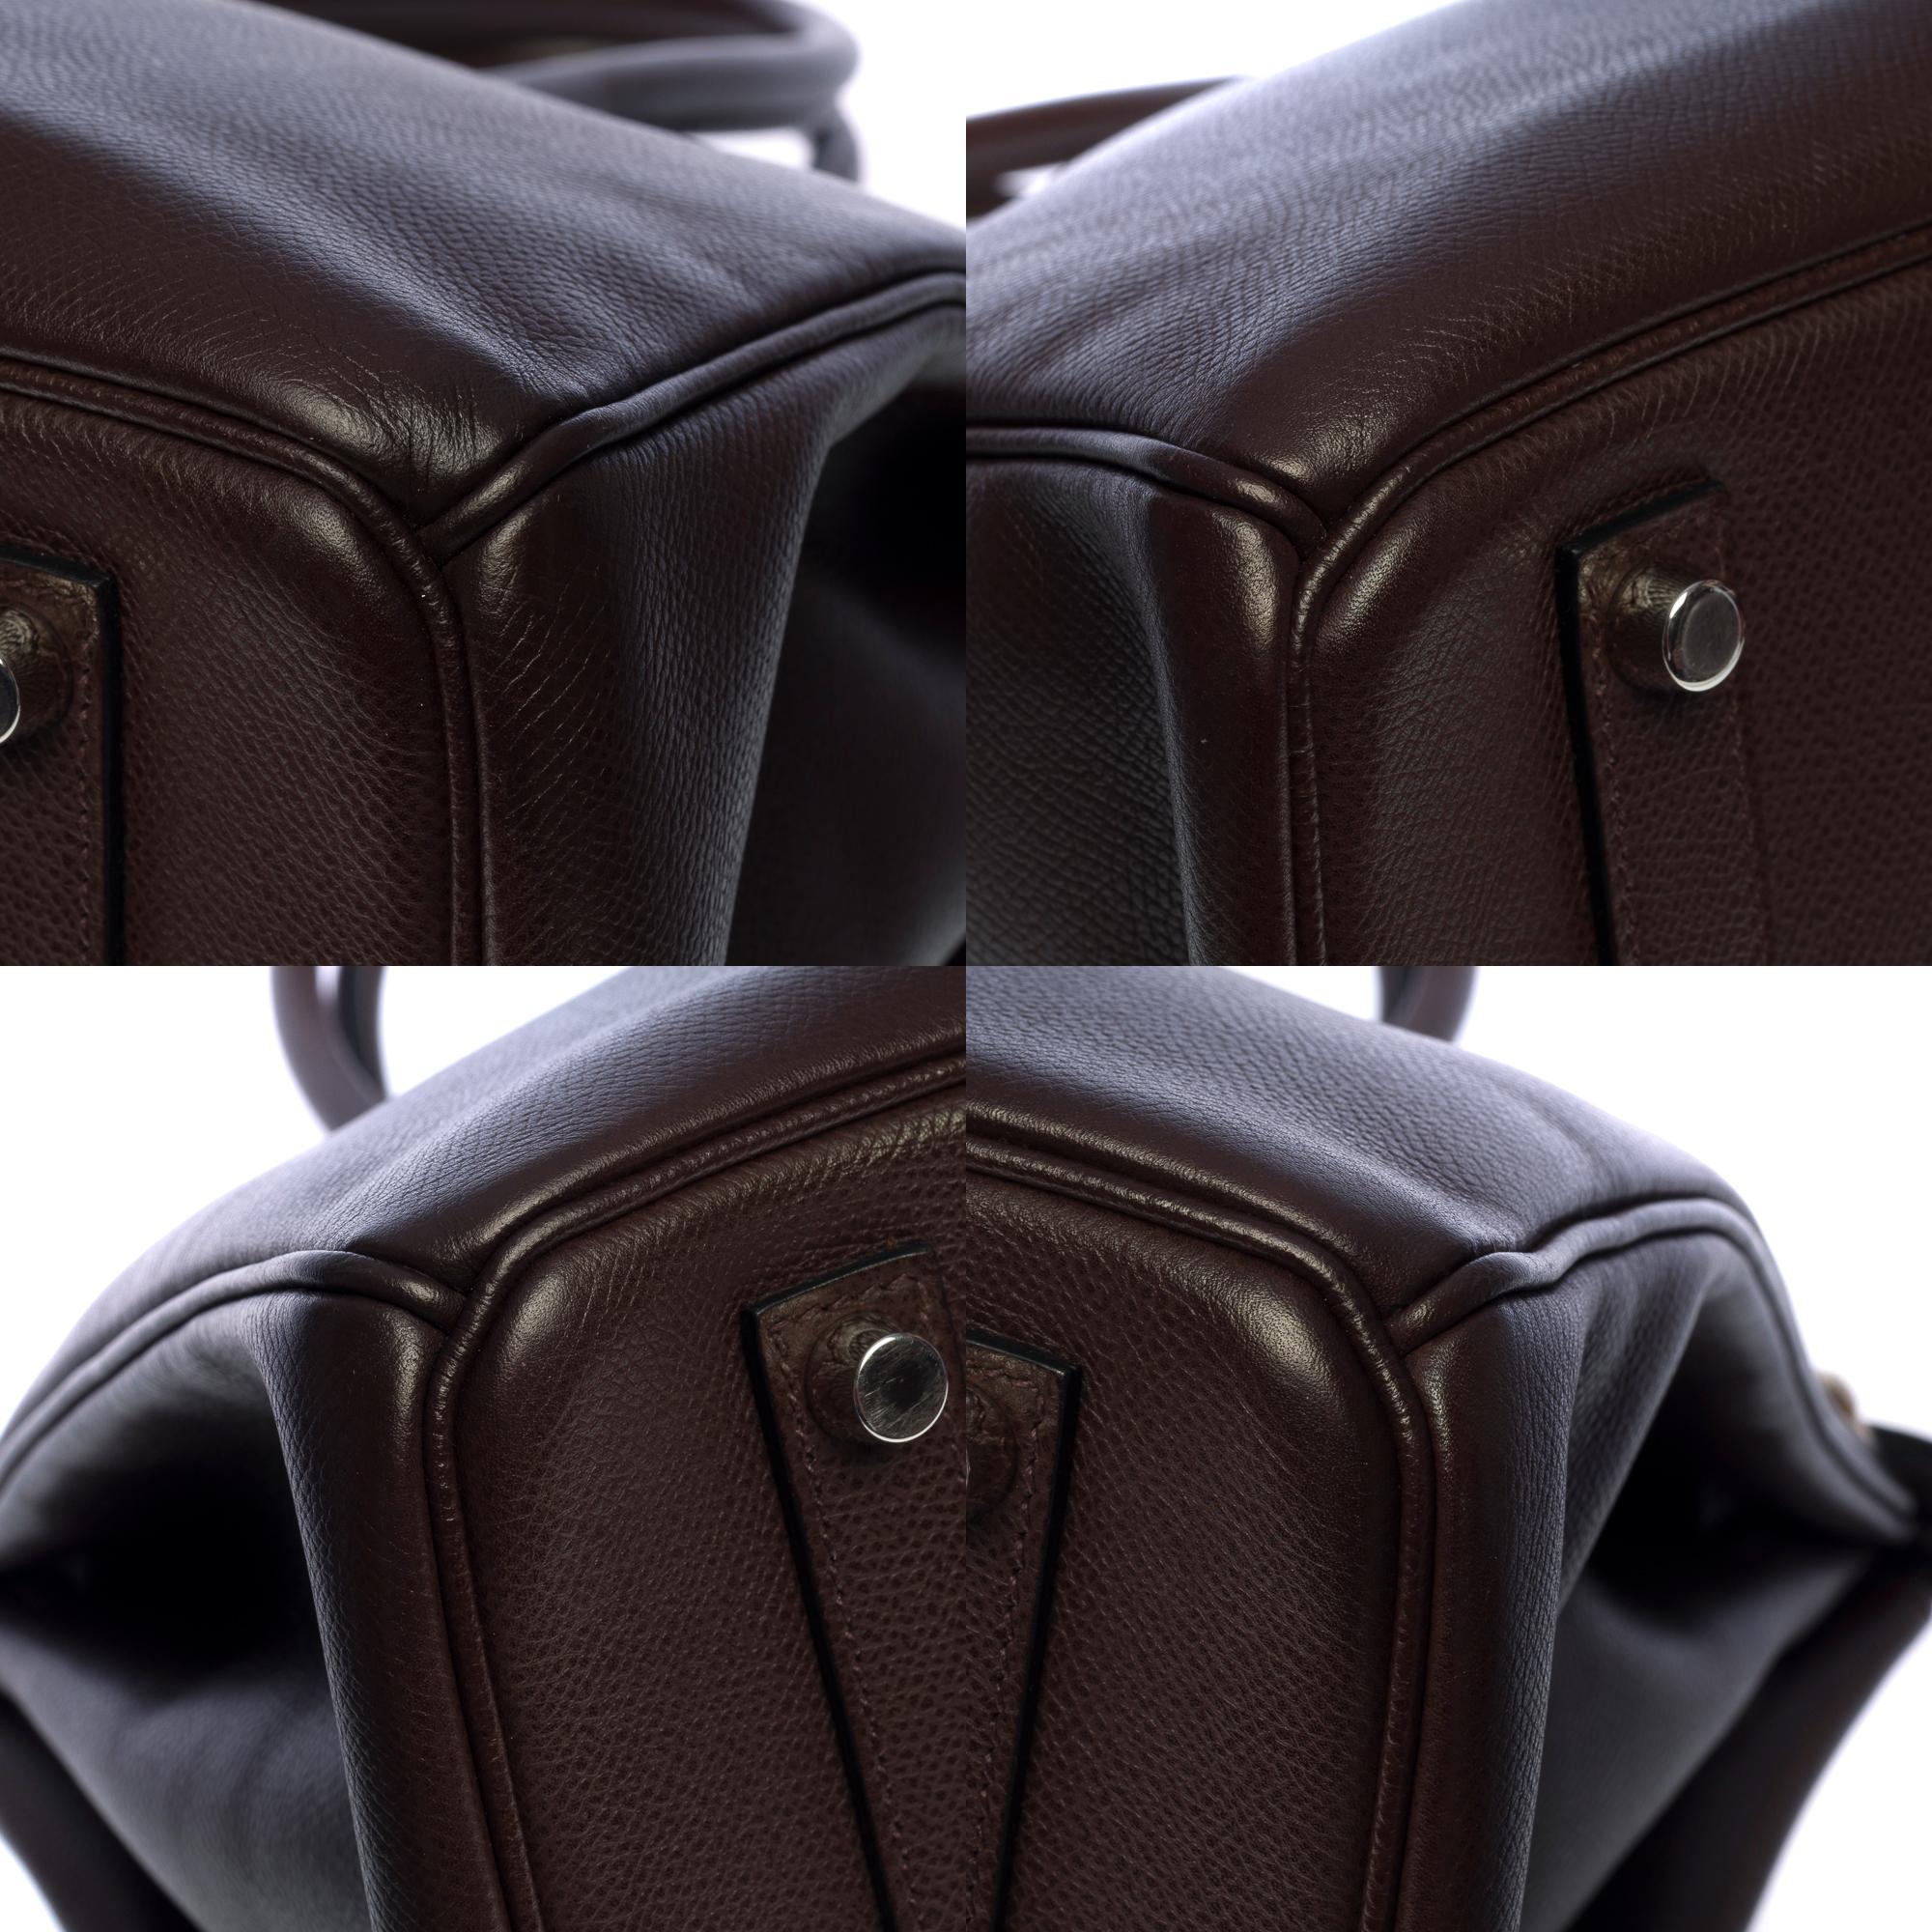 Stunning Hermès Birkin 35 handbag in Brown Epsom leather, SHW 4